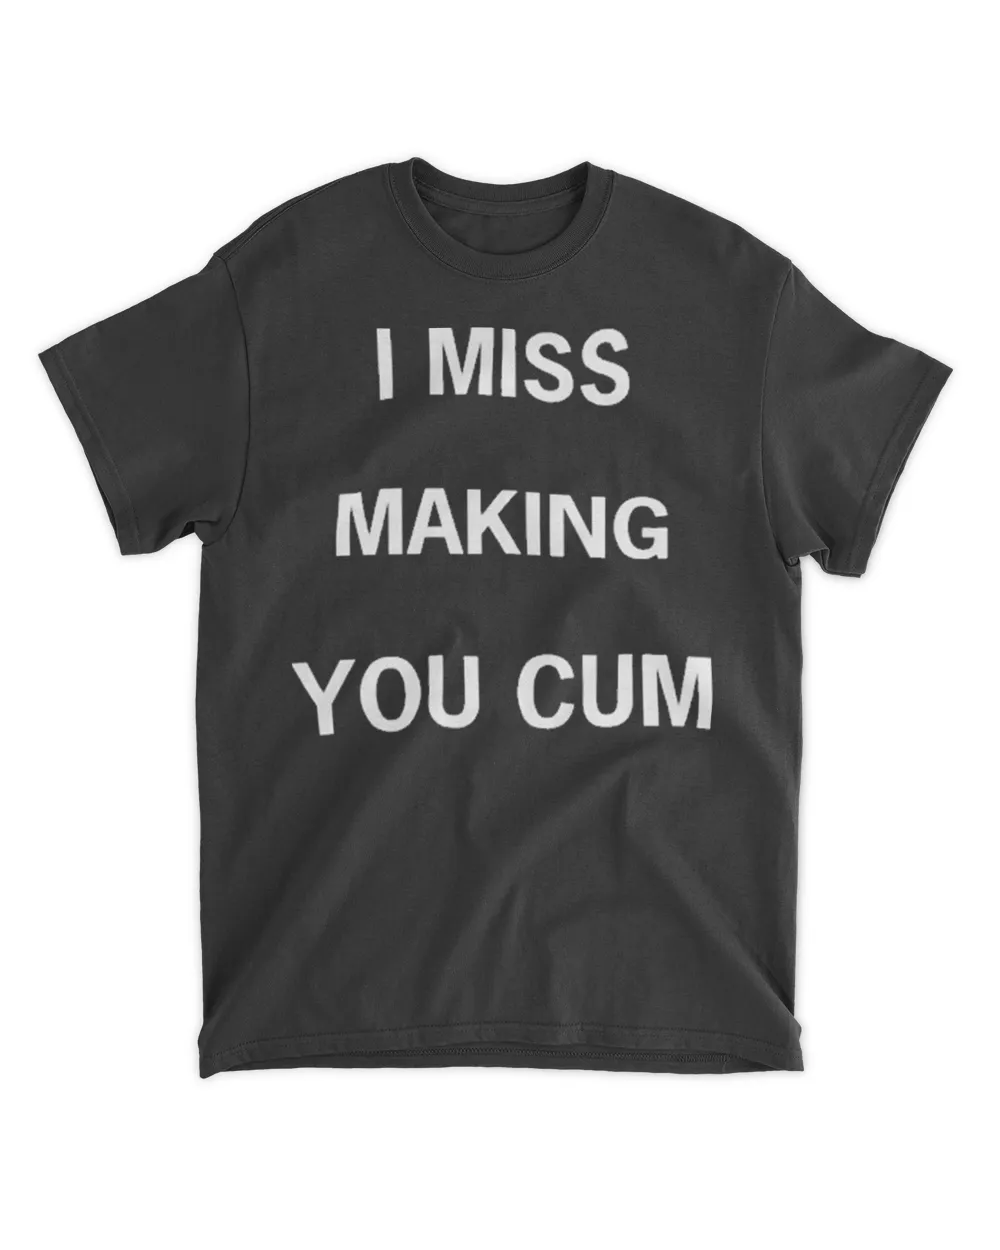 I miss making you cum shirt